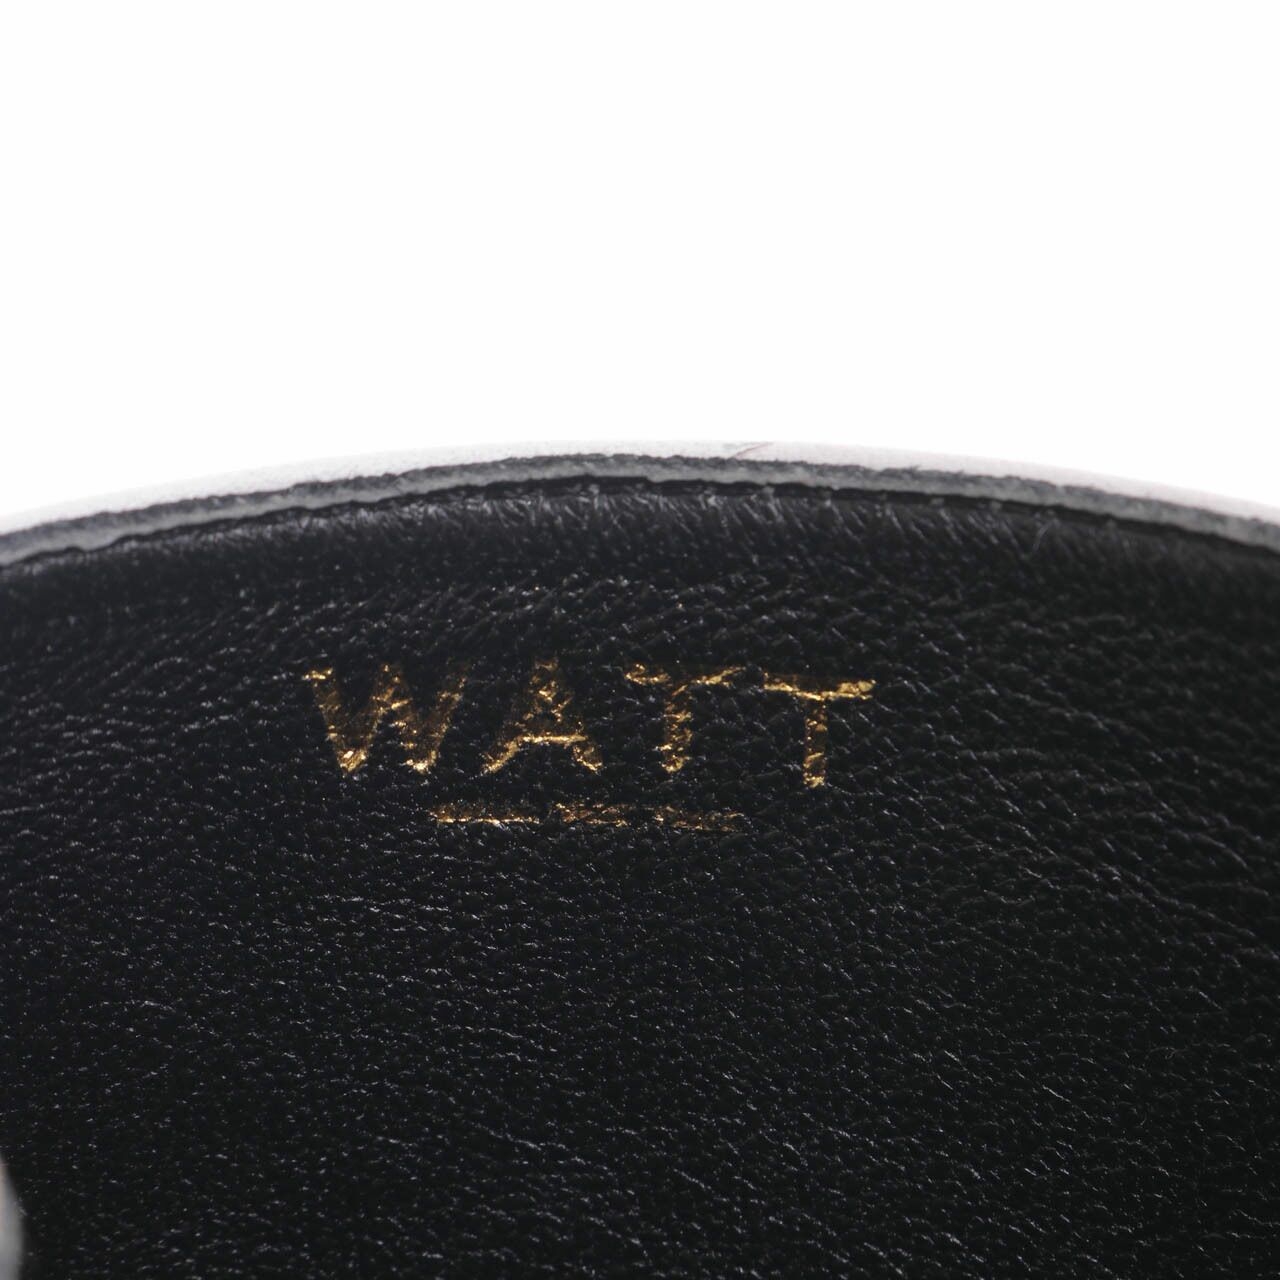 Watt-Walk The Talk Brown & White Sling Bag